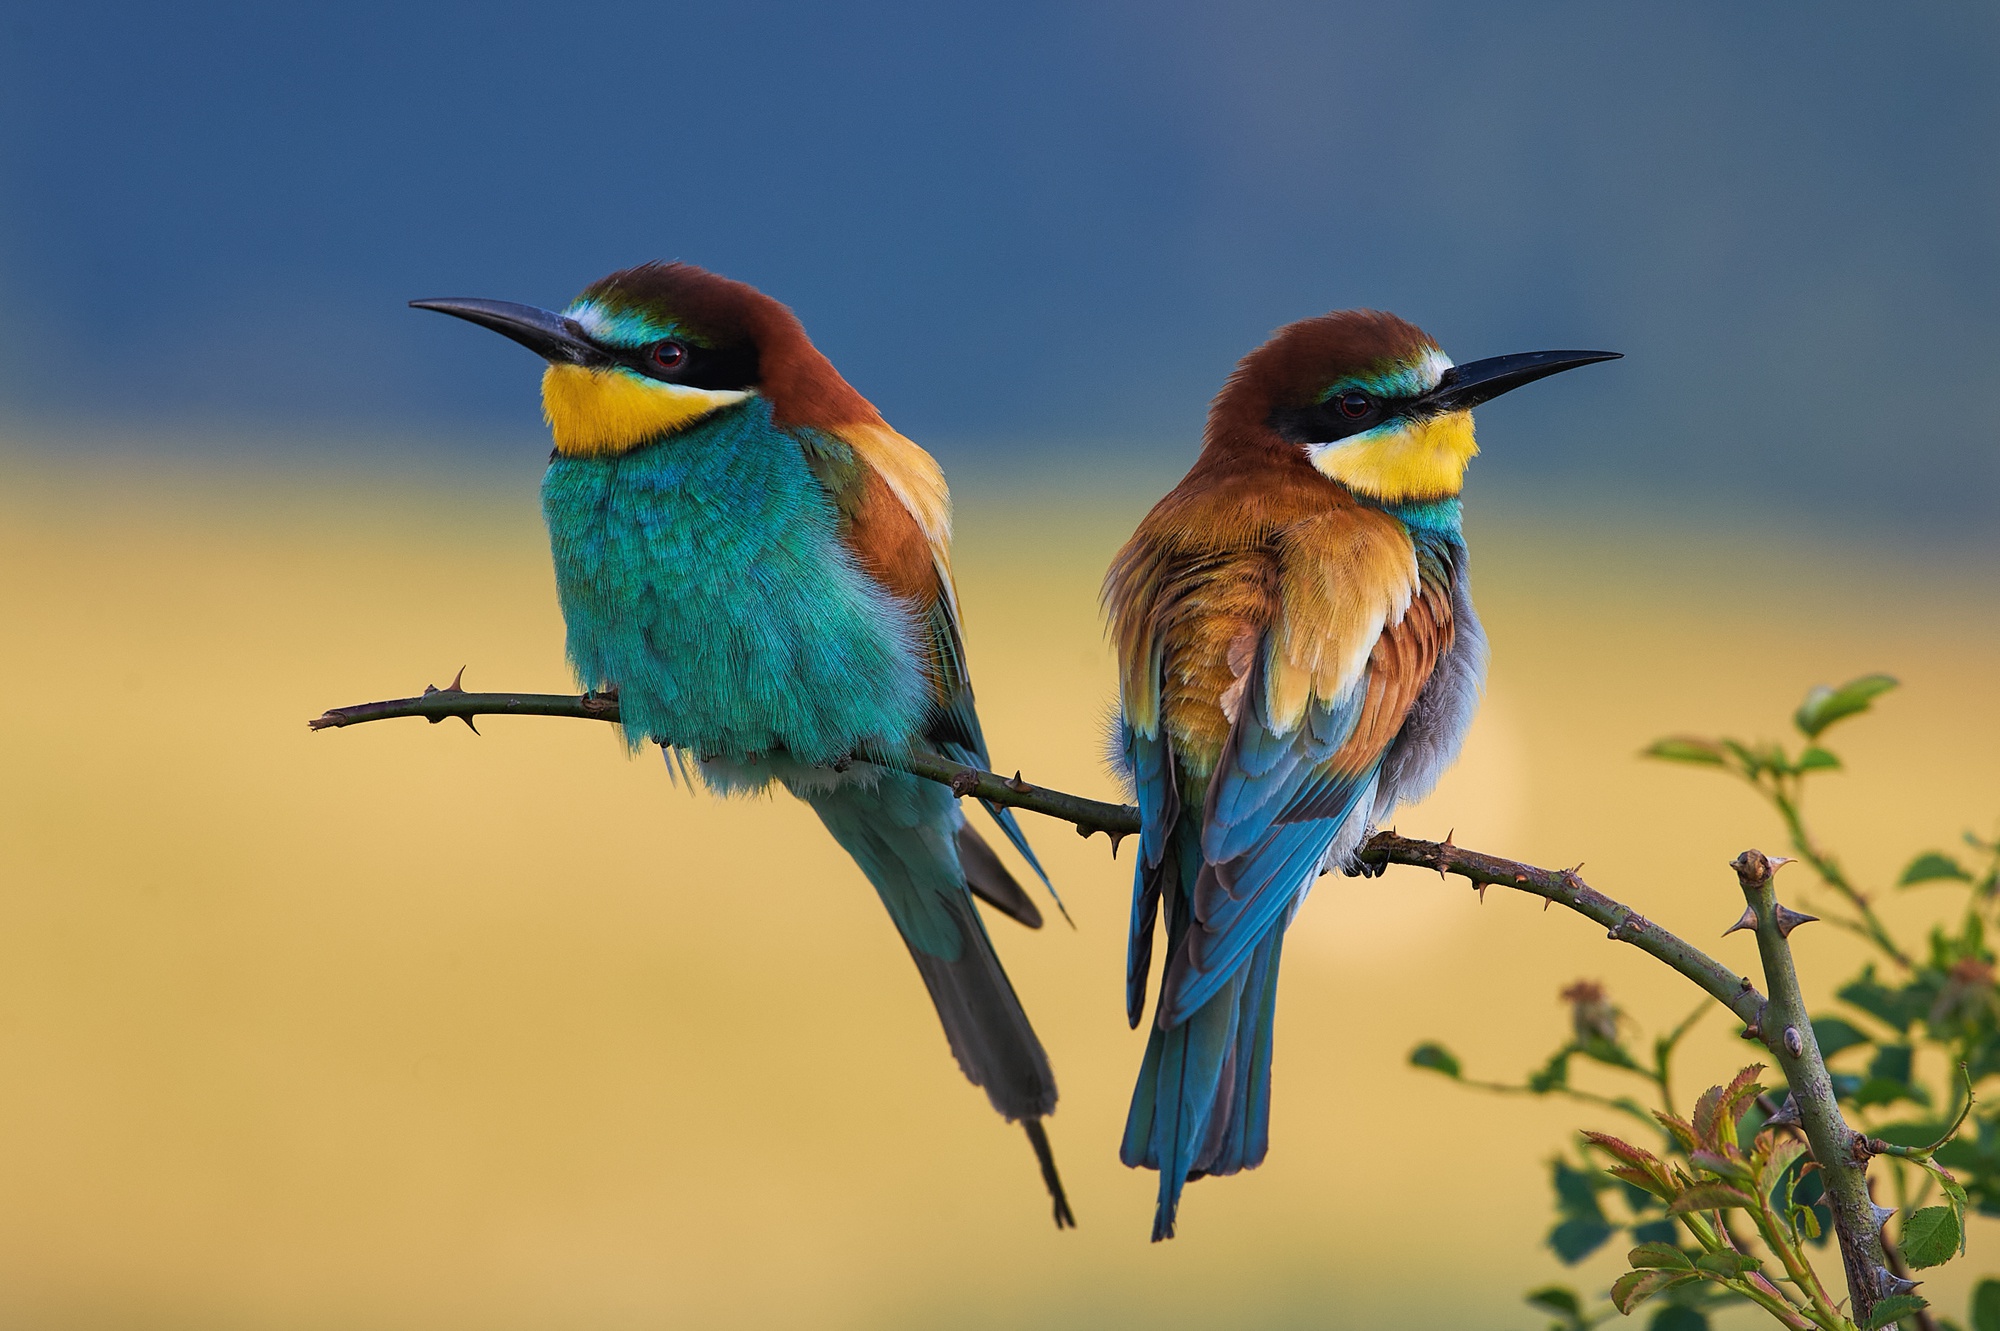 European Bee-eater (merops apiaster) by Kalin Botev